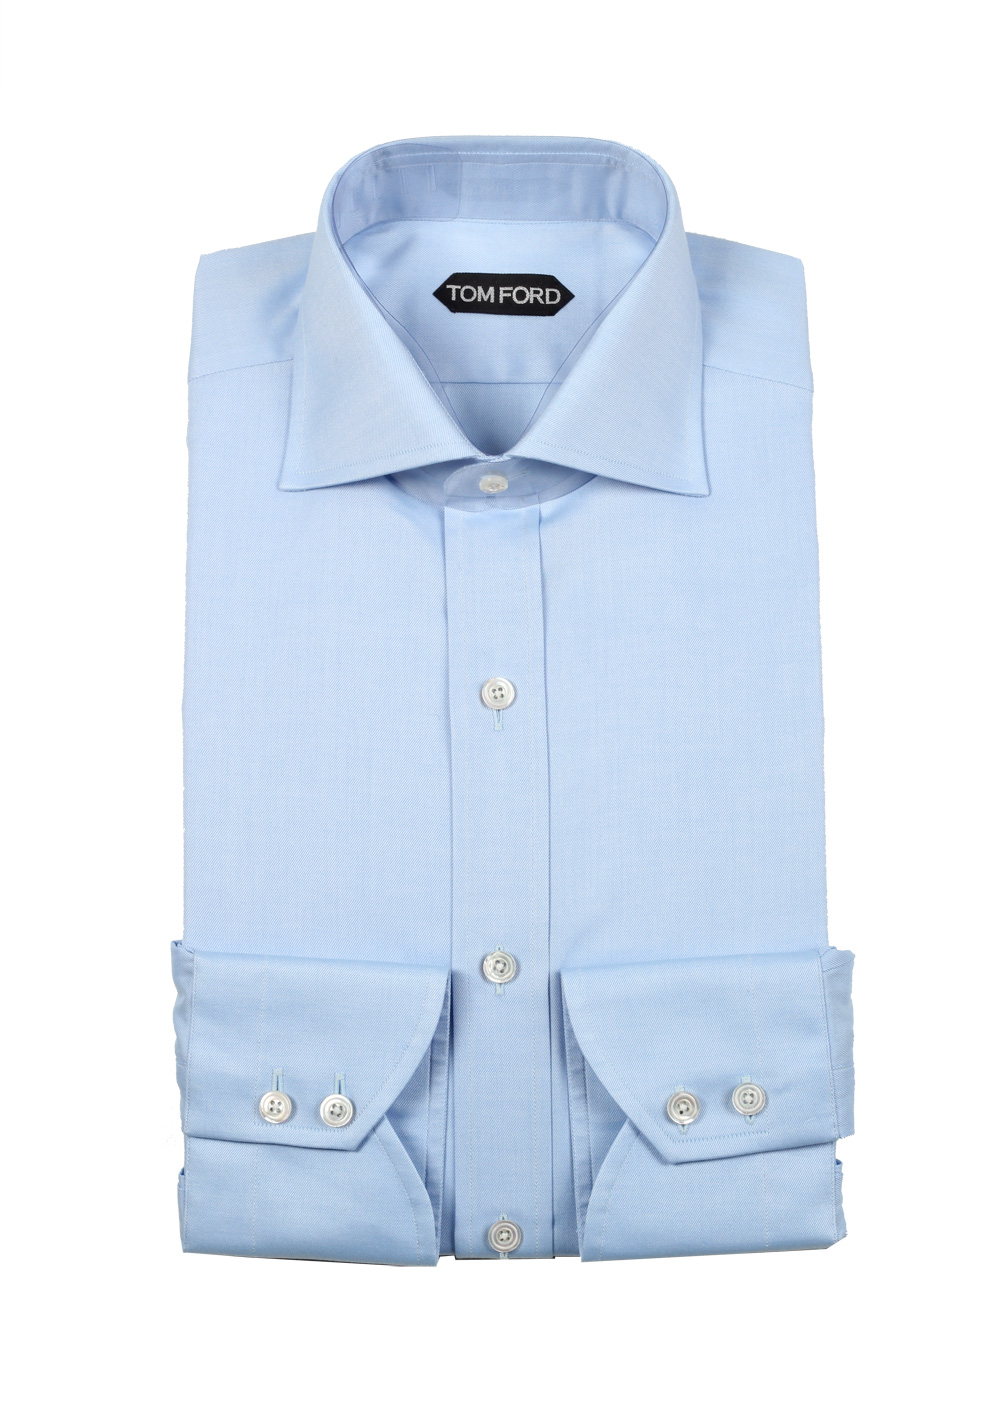 TOM FORD Solid Blue Shirt Size 39 / 15,5 U.S. | Costume Limité